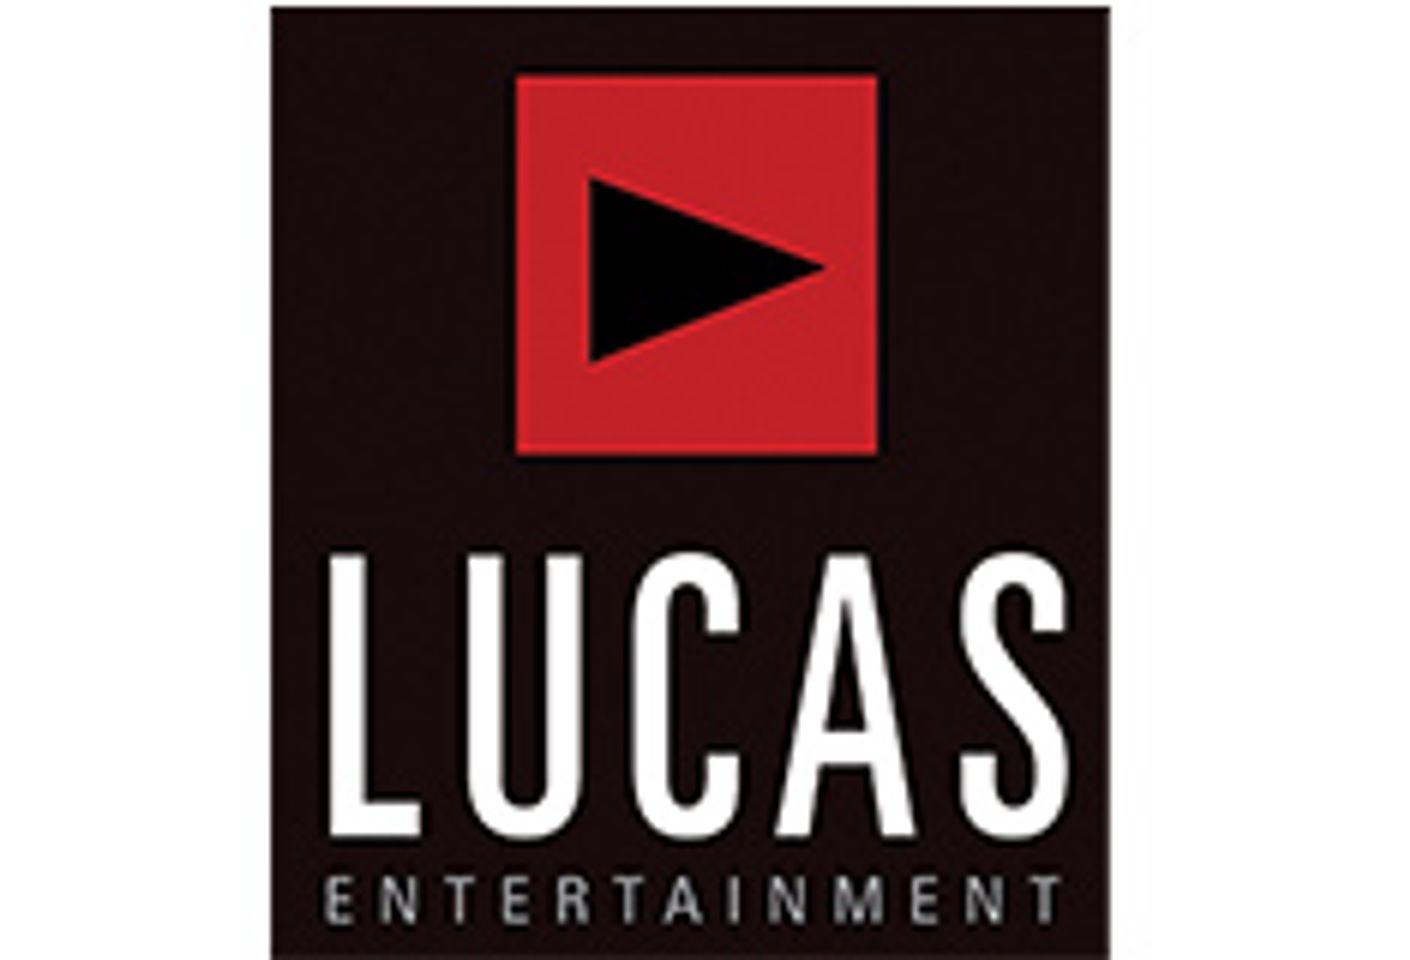 Lucas Entertainment Revamps Affiliate Program